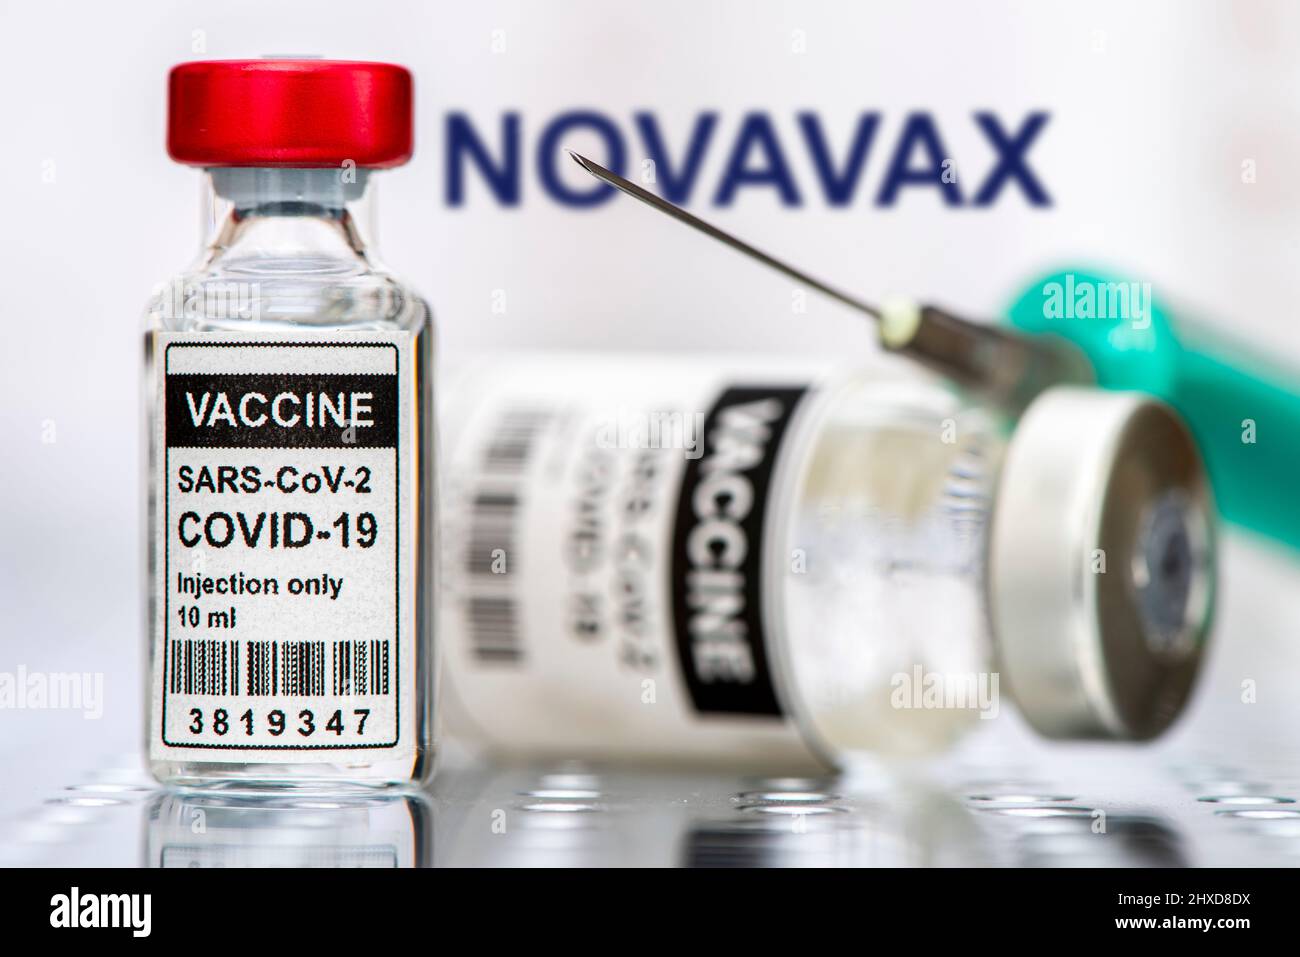 NOVAVAX mRNA Vaccine against Corona Covid-19 Stock Photo